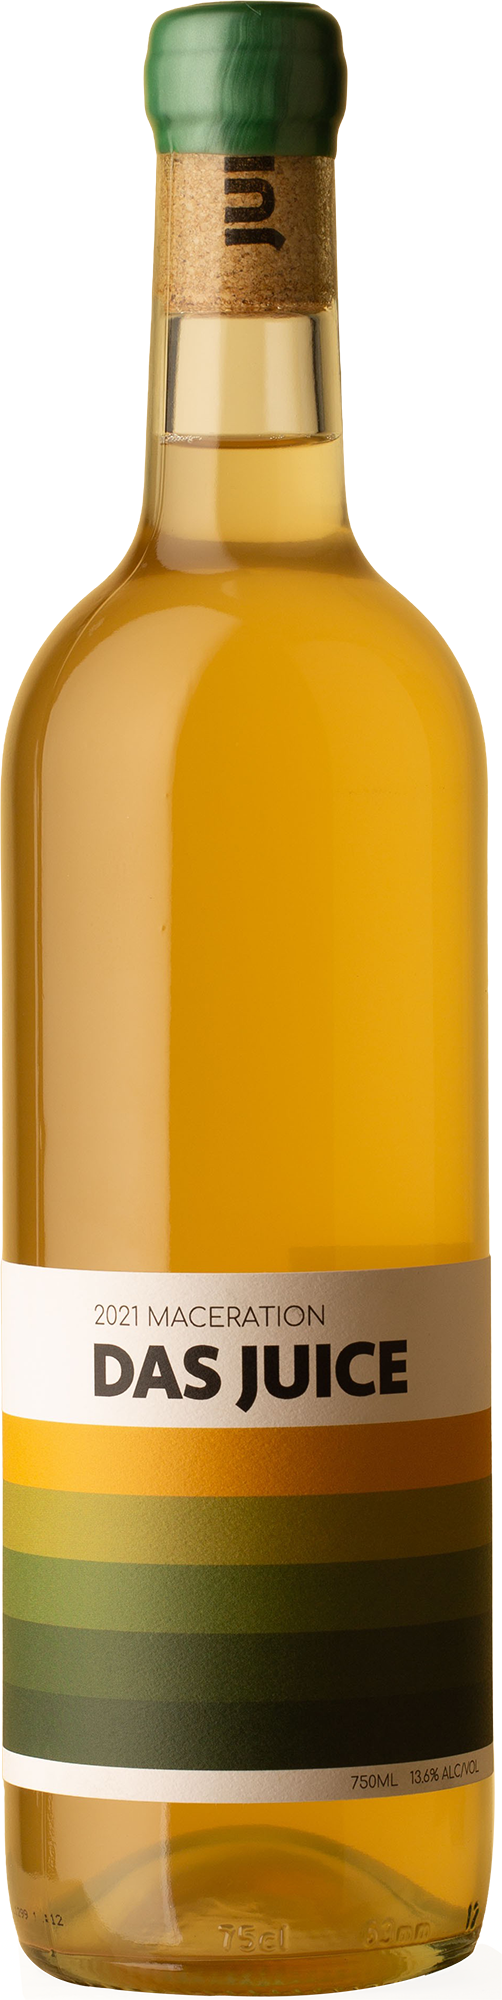 Das Juice - Maceration 2021 Orange Wine